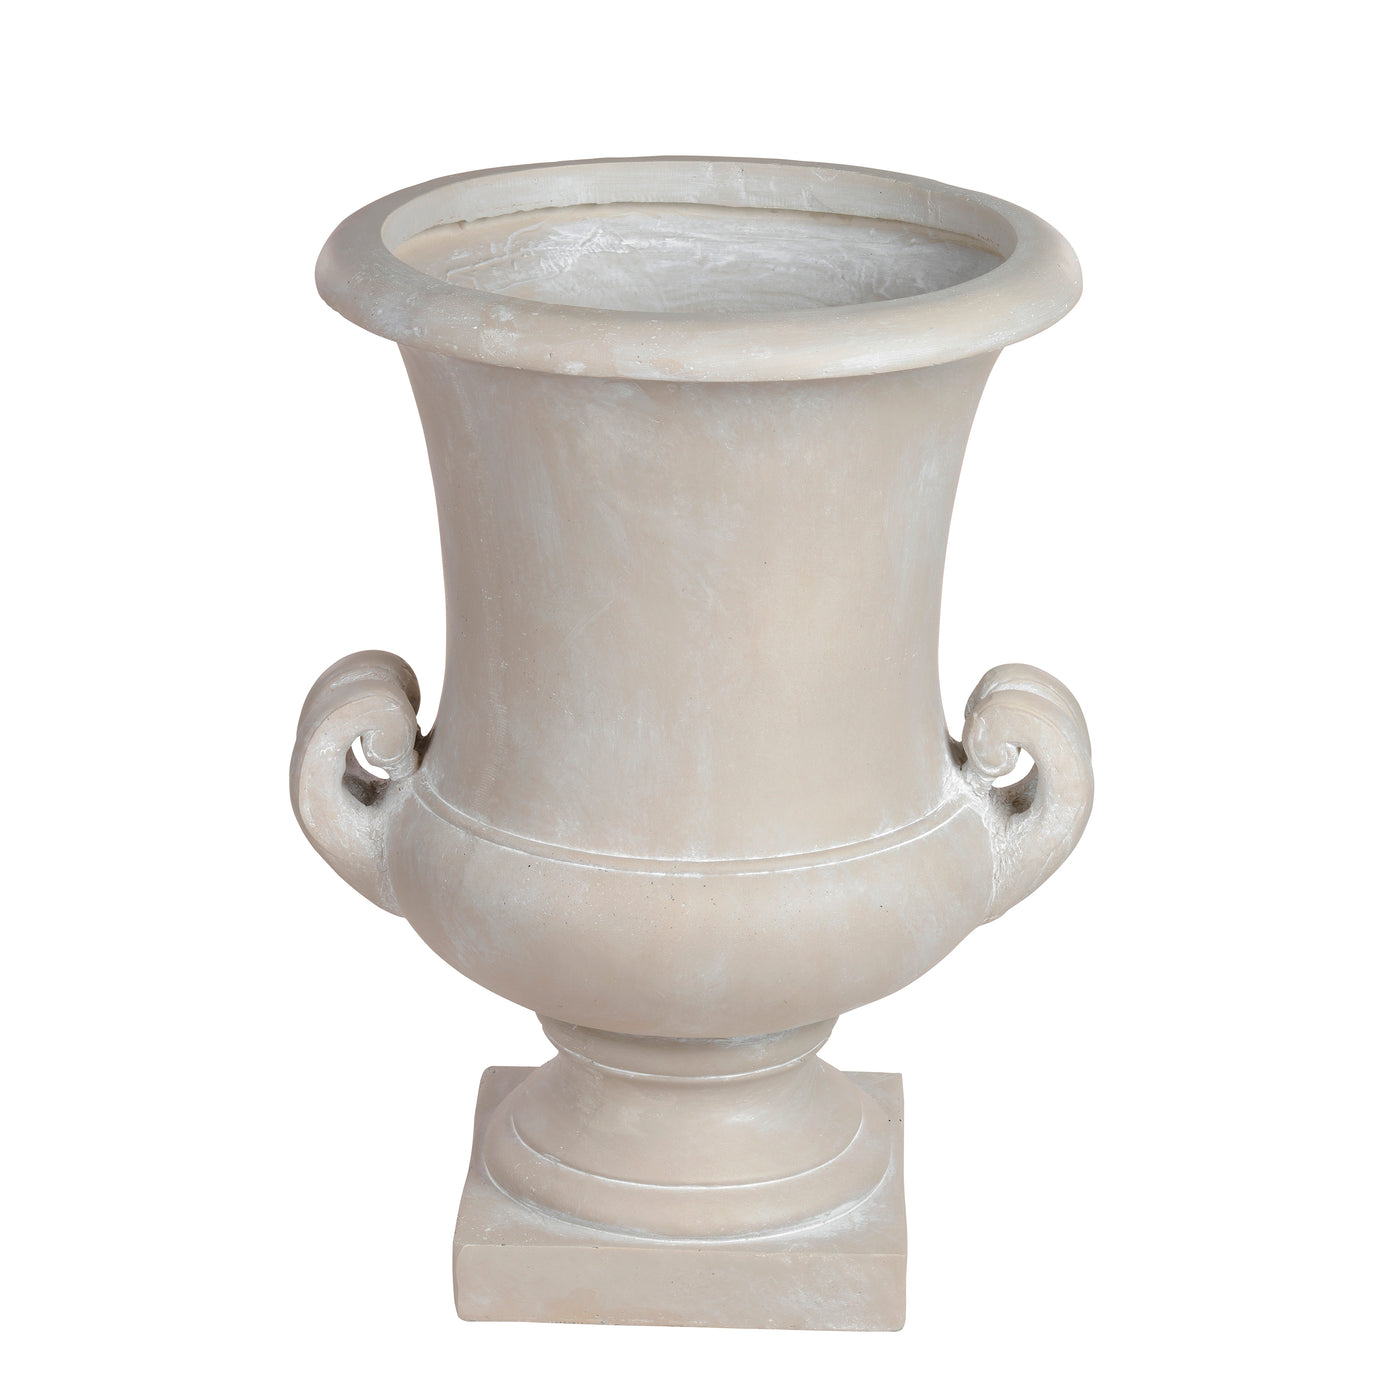 Luxury stonecast urn planter in light grey